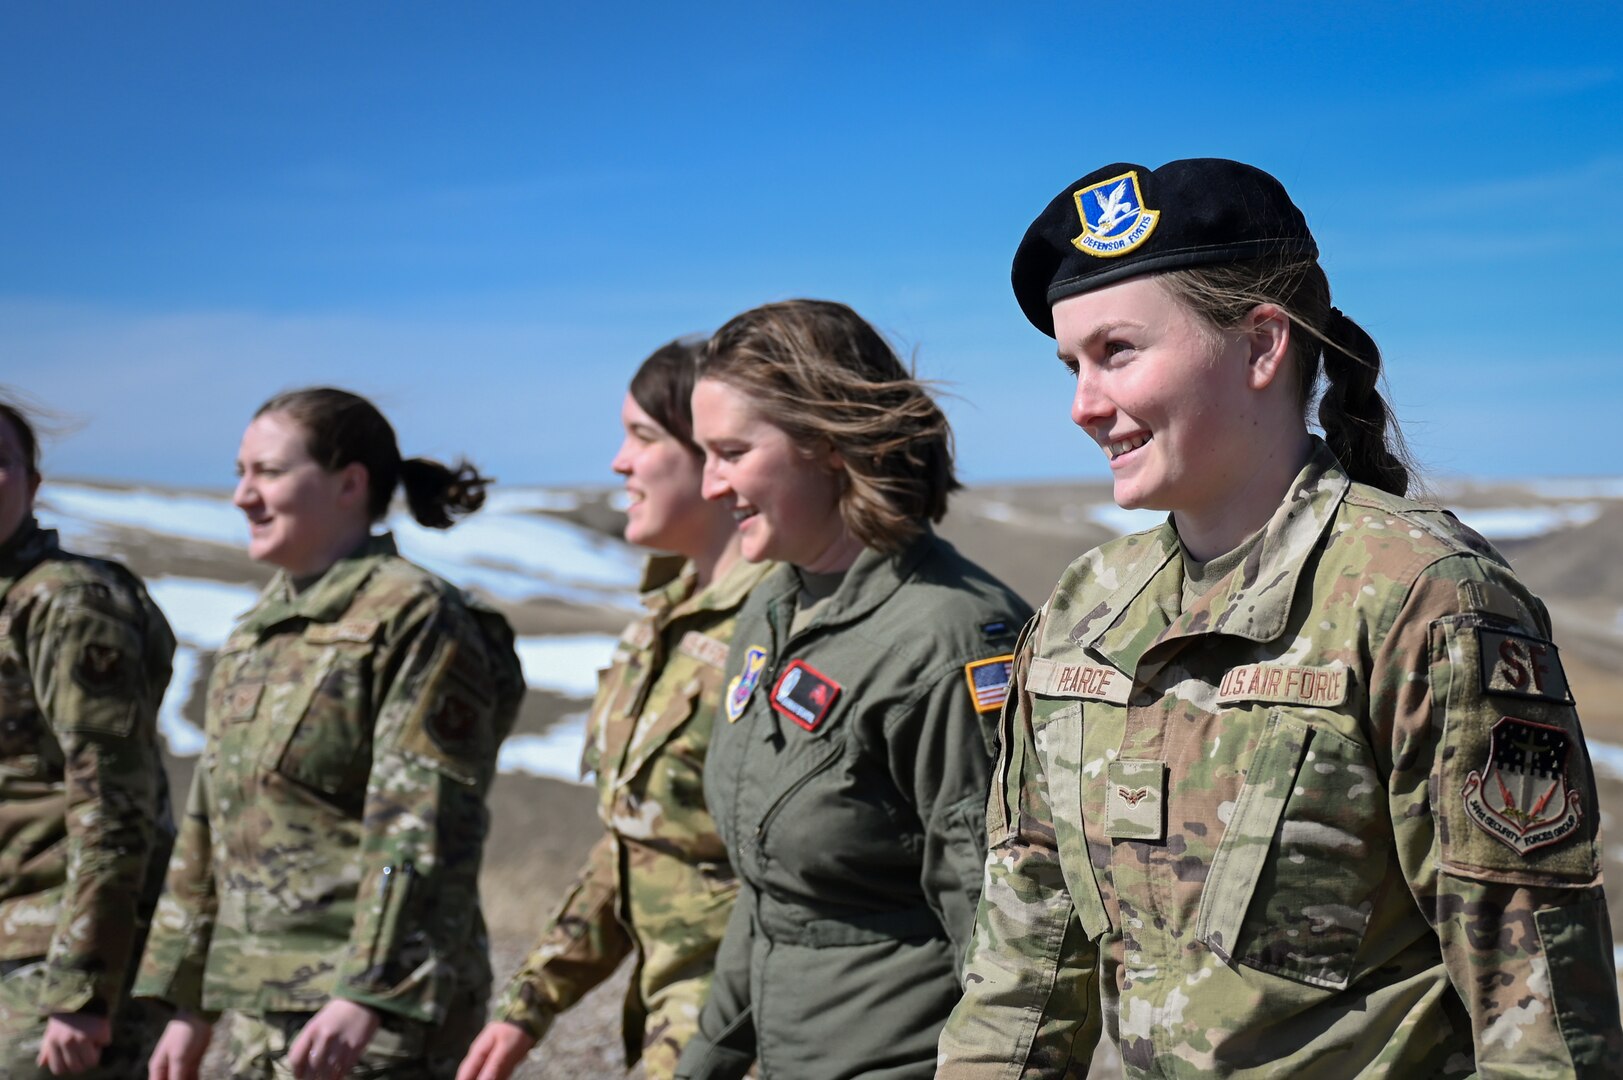 A group of five women in military uniform walk alongside each other.